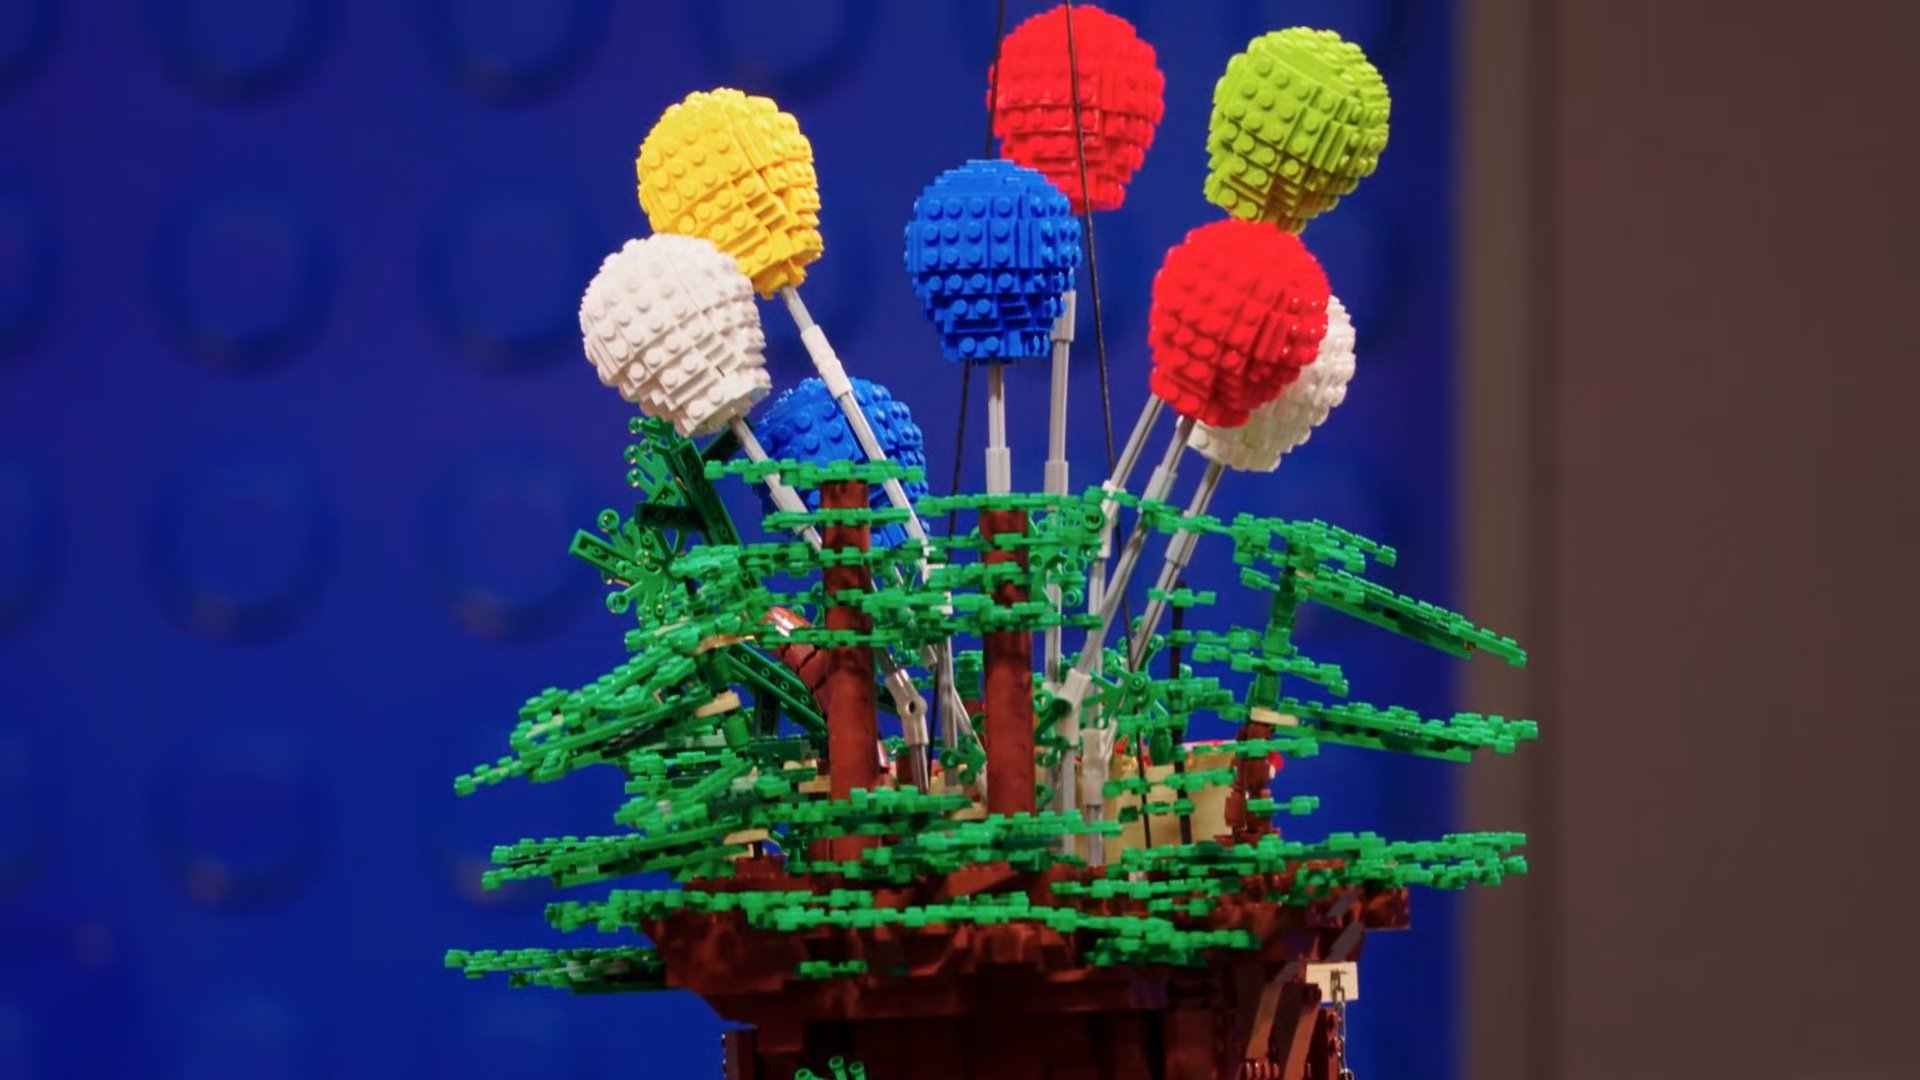 LEGO Masters U.S Season 2     - One Hanging Brick Challenge – Susan and Jen - Birthday Party Treehouse